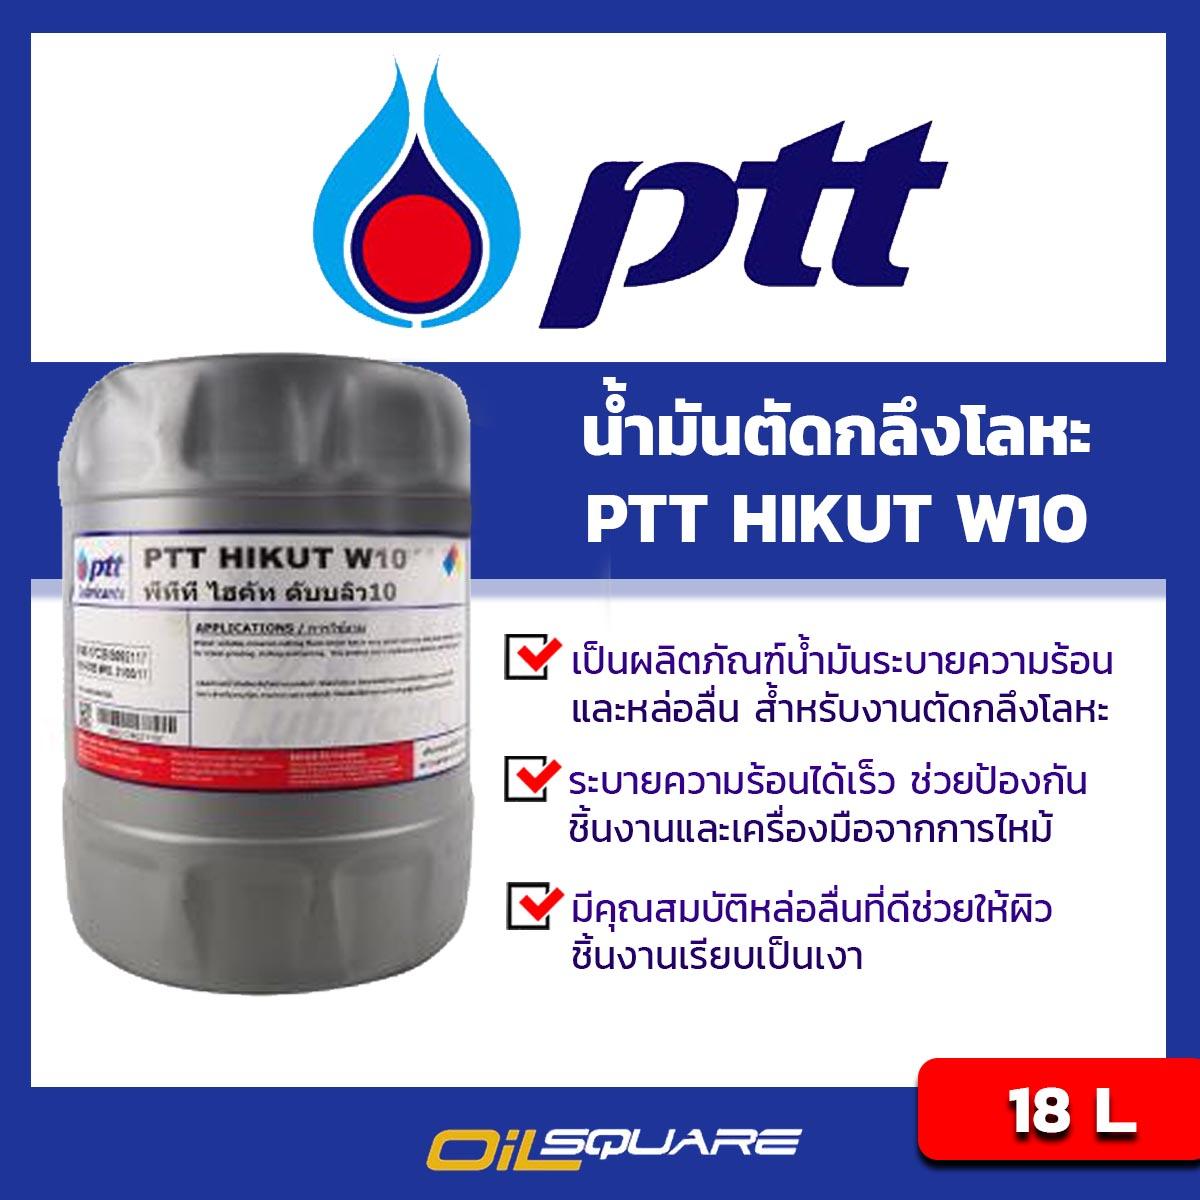 PTT HIKUT W10 พีทีที ไฮคัท ดับบลิว 10 น้ำมันตัดกลึงโลหะ Cutting Oil  ขนาด 18 ลิตร l Oilsquare ออยสแควร์